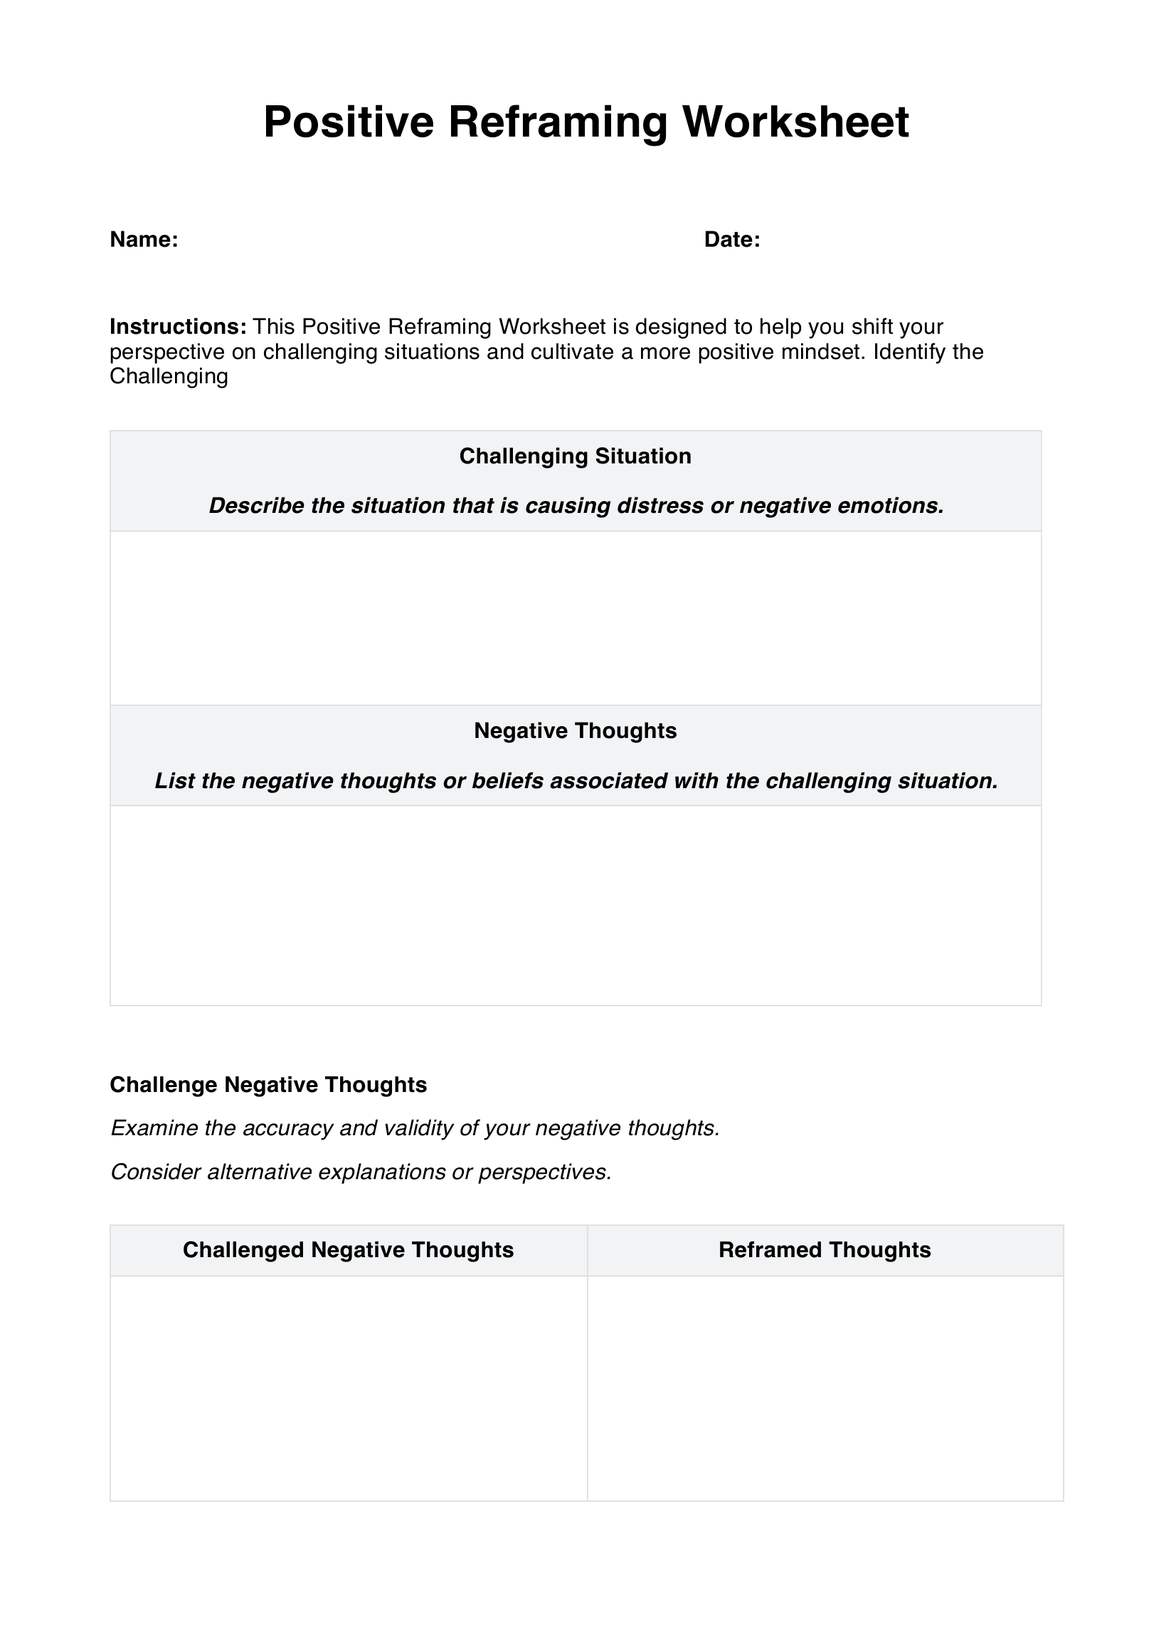 Positive Reframing Worksheet PDF Example